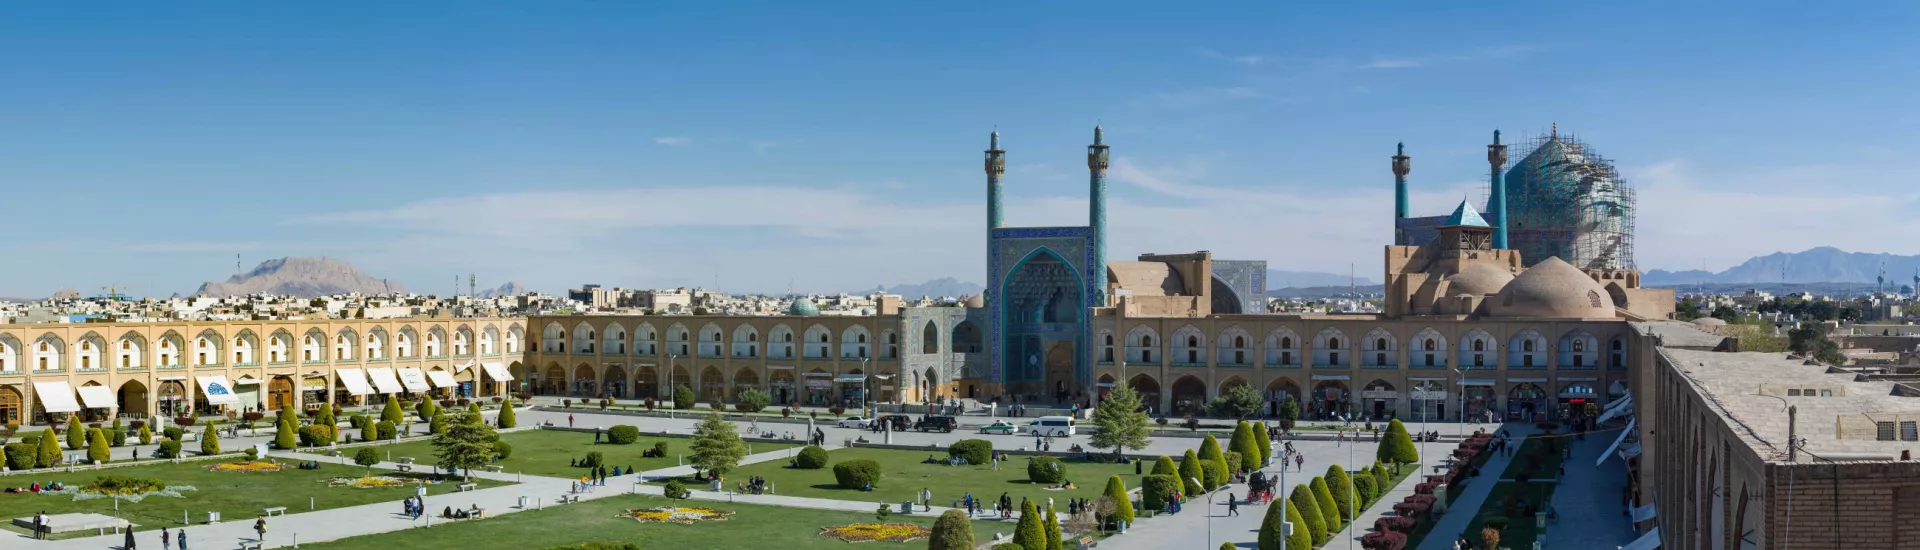 Iran, Isfahan, Naqsch-e Dschahan